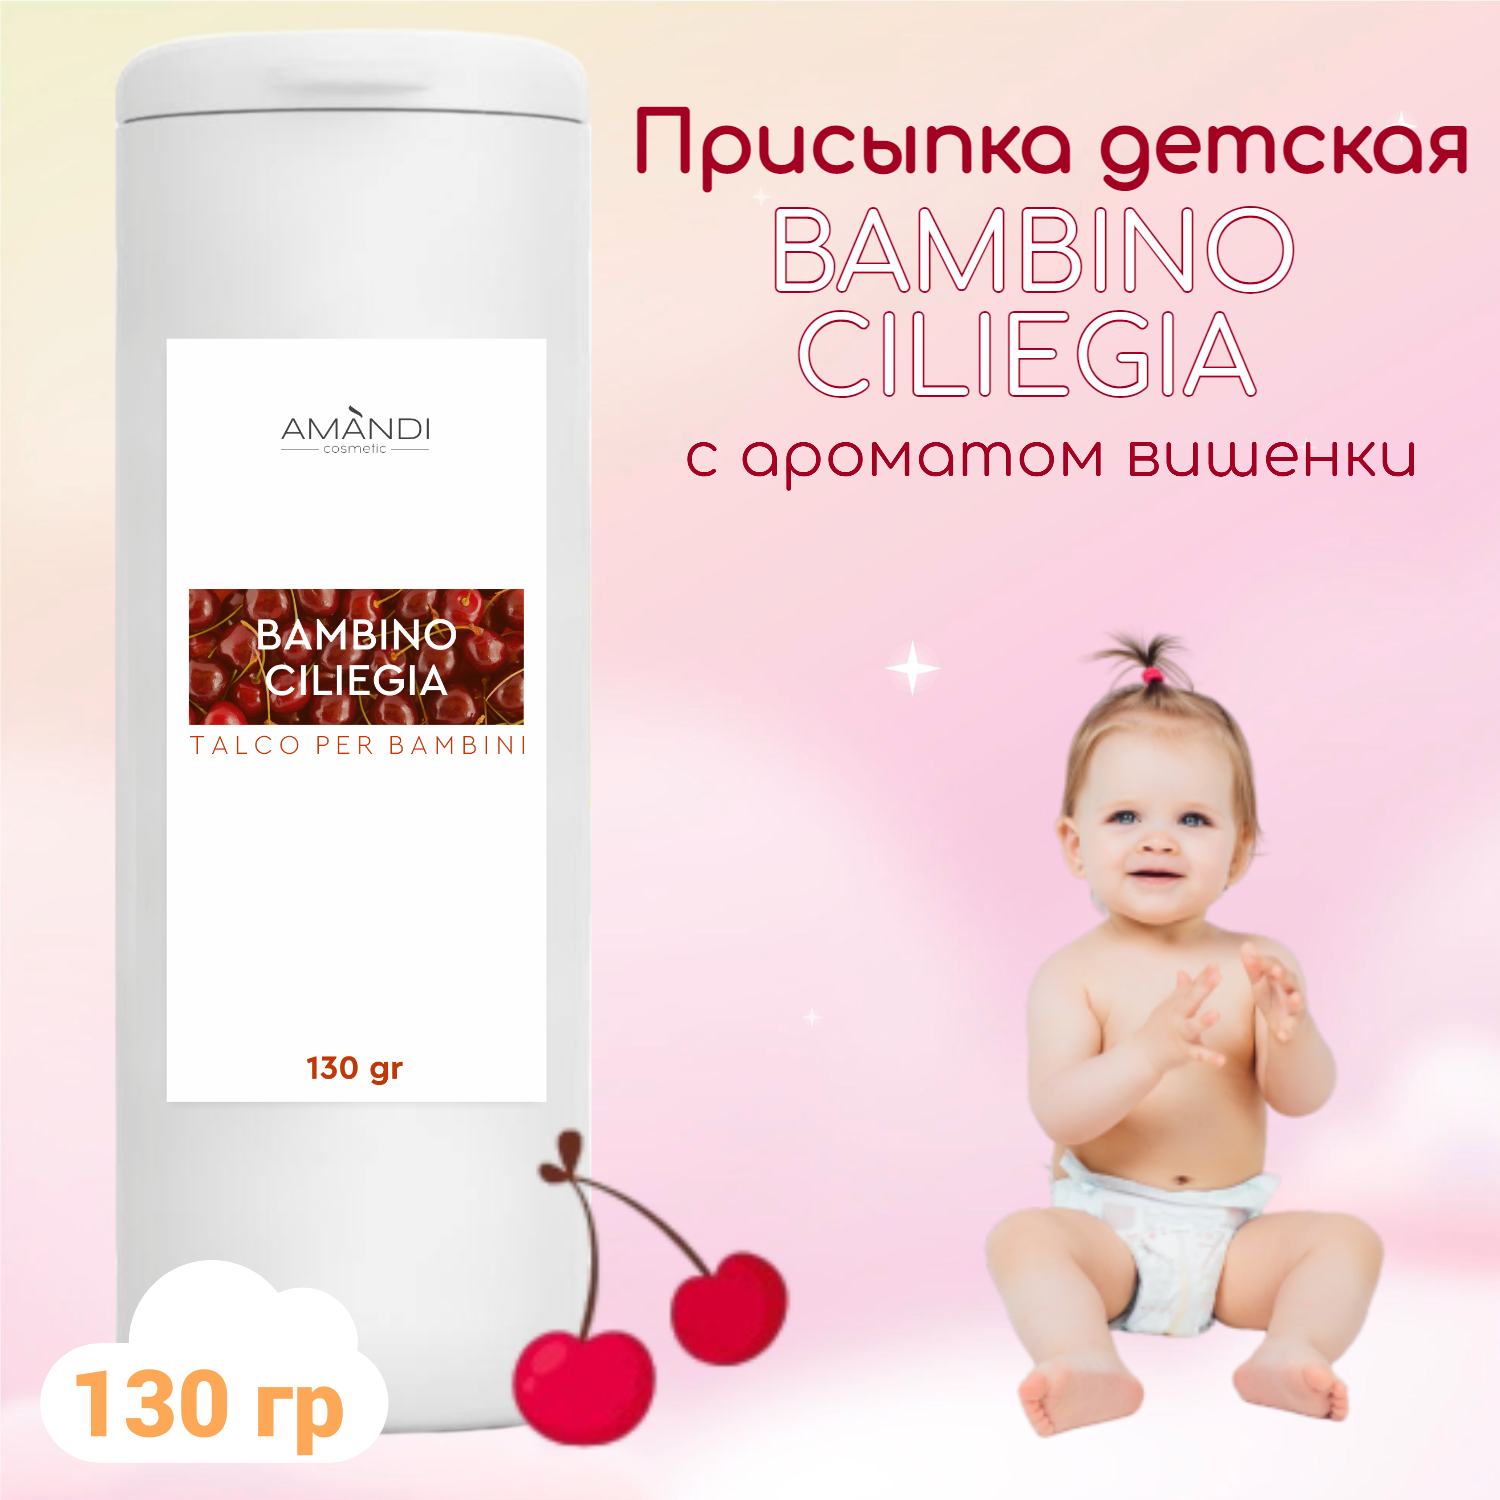 Присыпка детская AMANDI BAMBINO CILIEGIA с ароматом вишни 130 грамм - фото 2